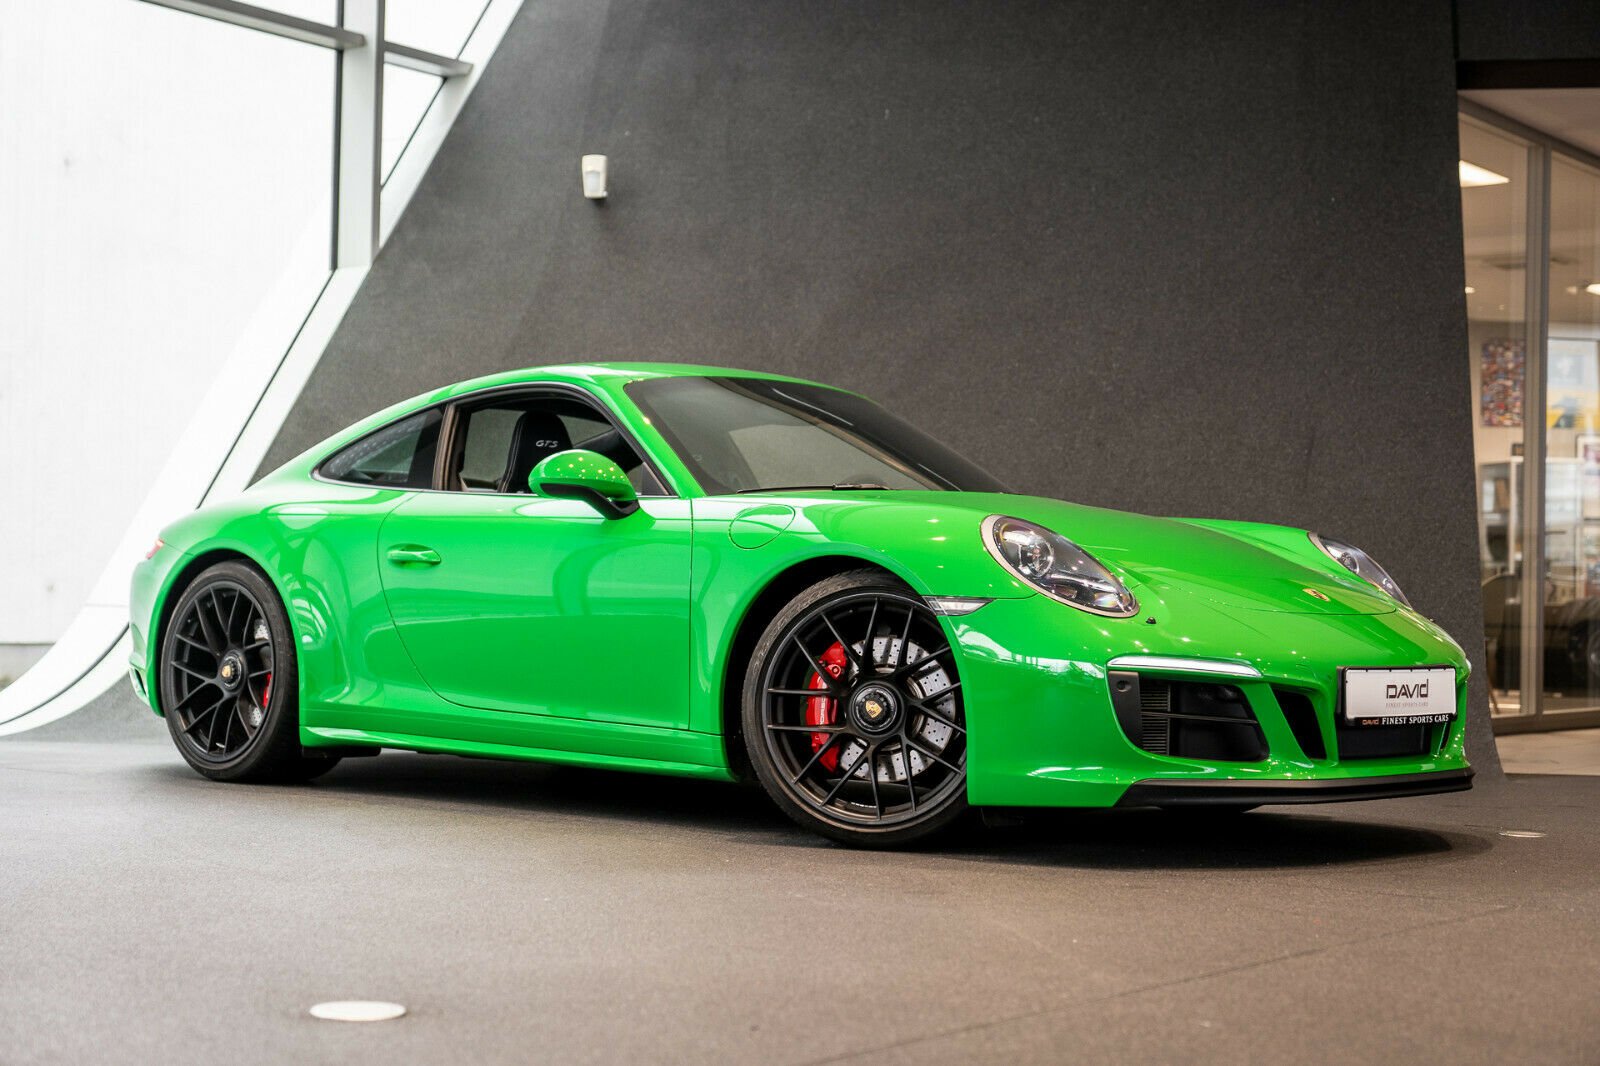 Porsche (911) 991 GTS for sale - Elferspot - Marketplace for Porsche